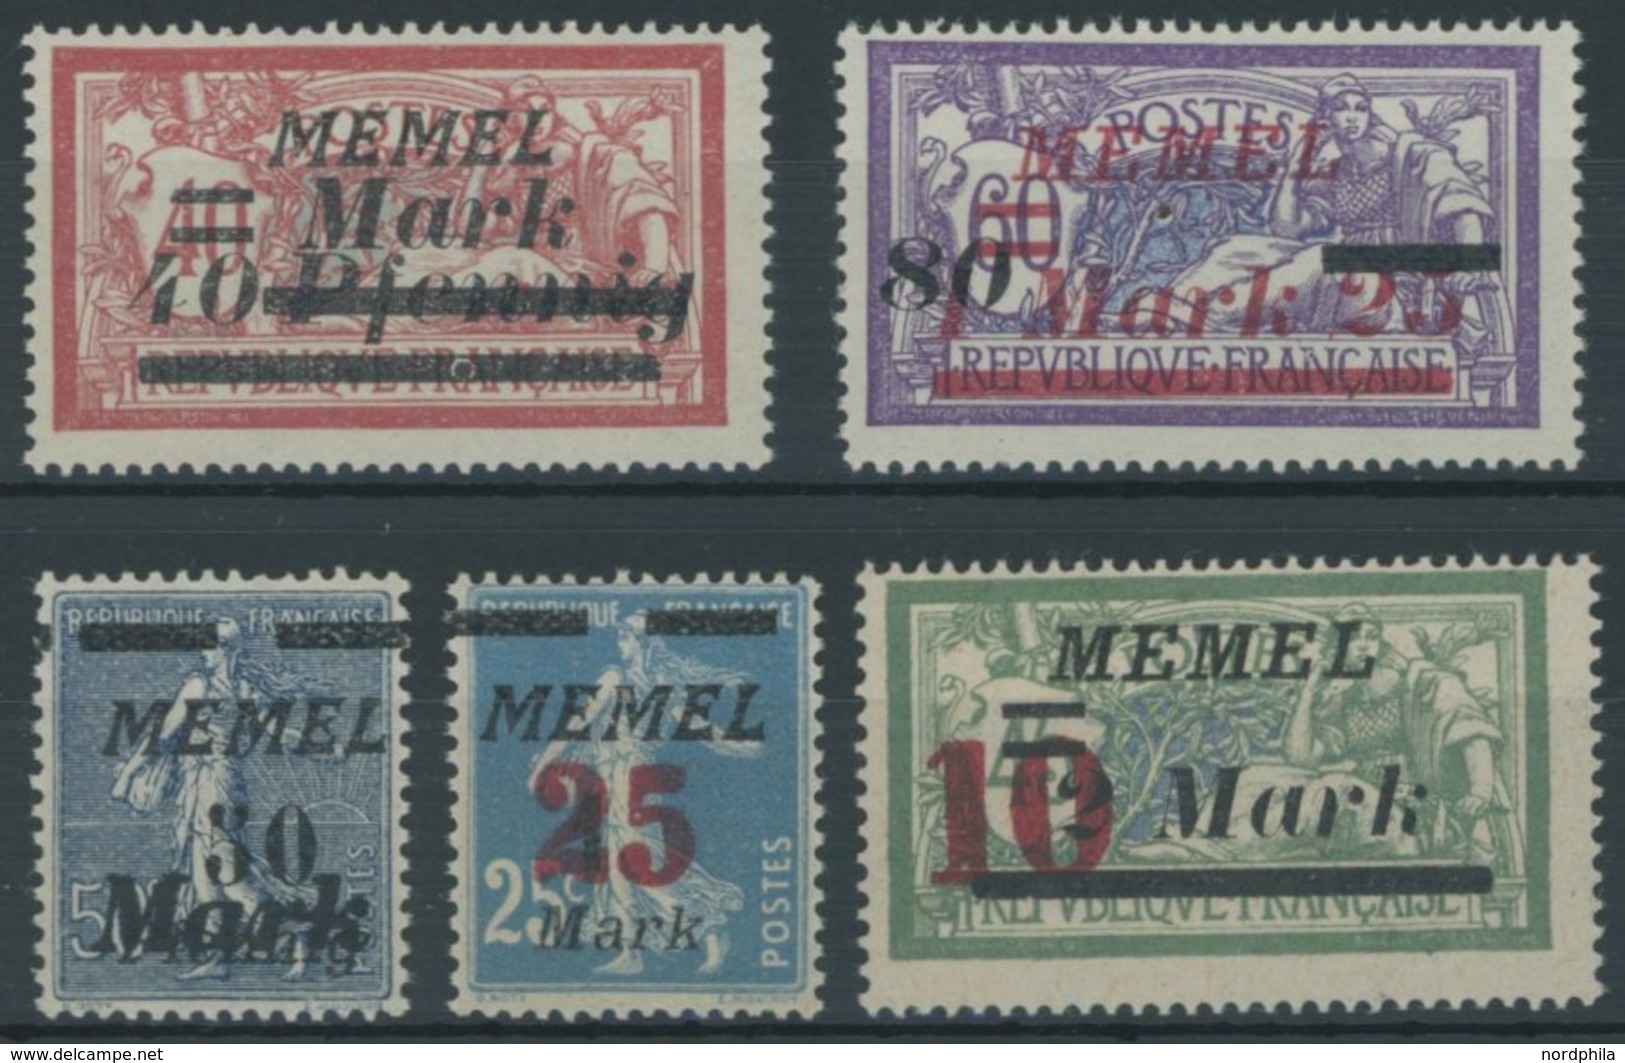 MEMELGEBIET 119-23 **, 1922/3, Staatsdruckerei Paris Und Staatsdruckerei Rytas, Postfrisch, 5 Prachtwerte, Mi. 64.- - Memelgebiet 1923